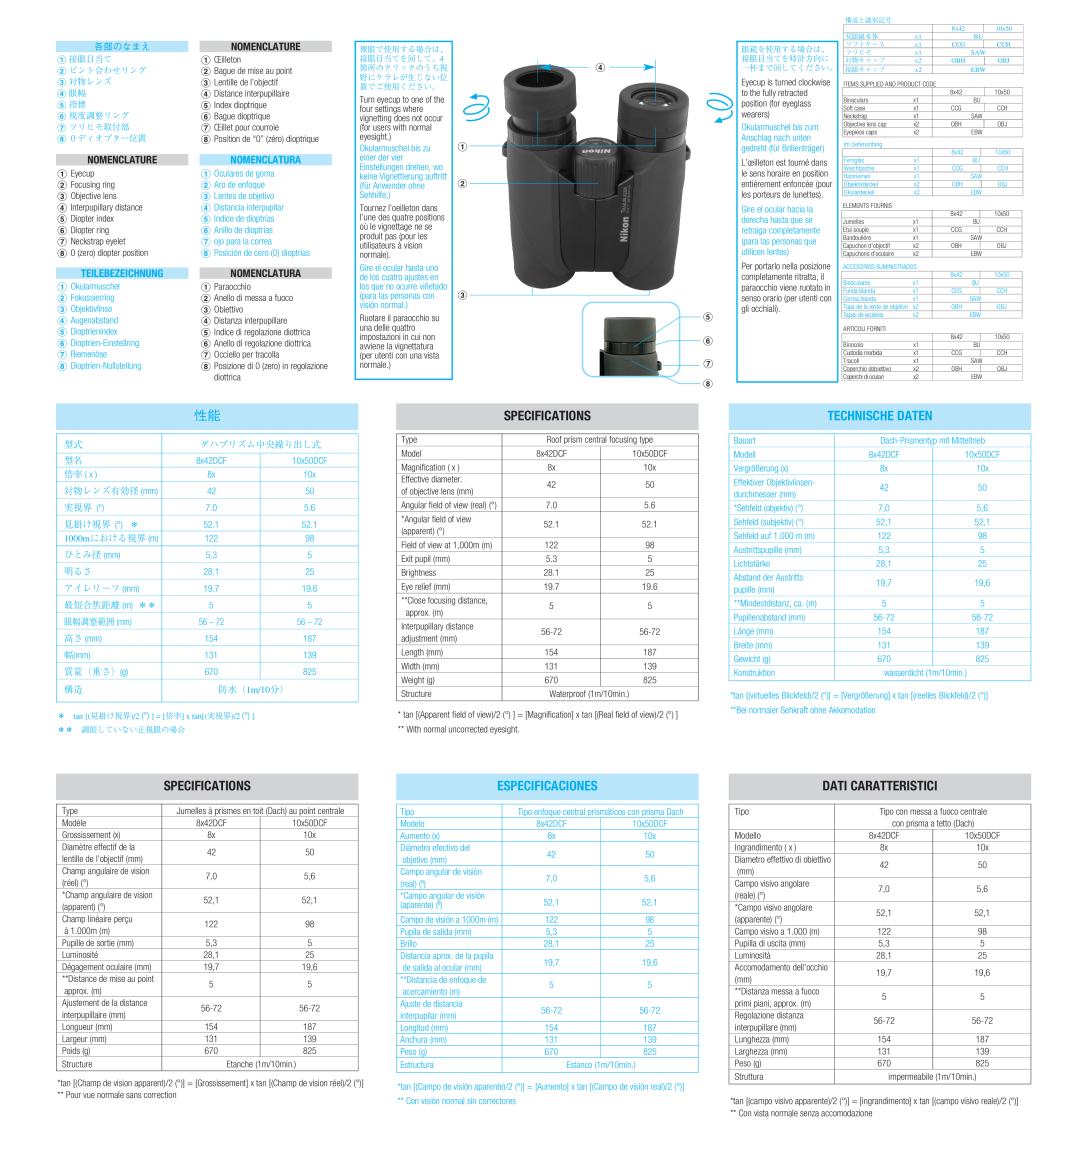 Nikon Sporter EX 10x50 Specifications, Dati Caratteristici, Nomenclature, Nomenclatura, Technische Daten, Teilebezeichnung 